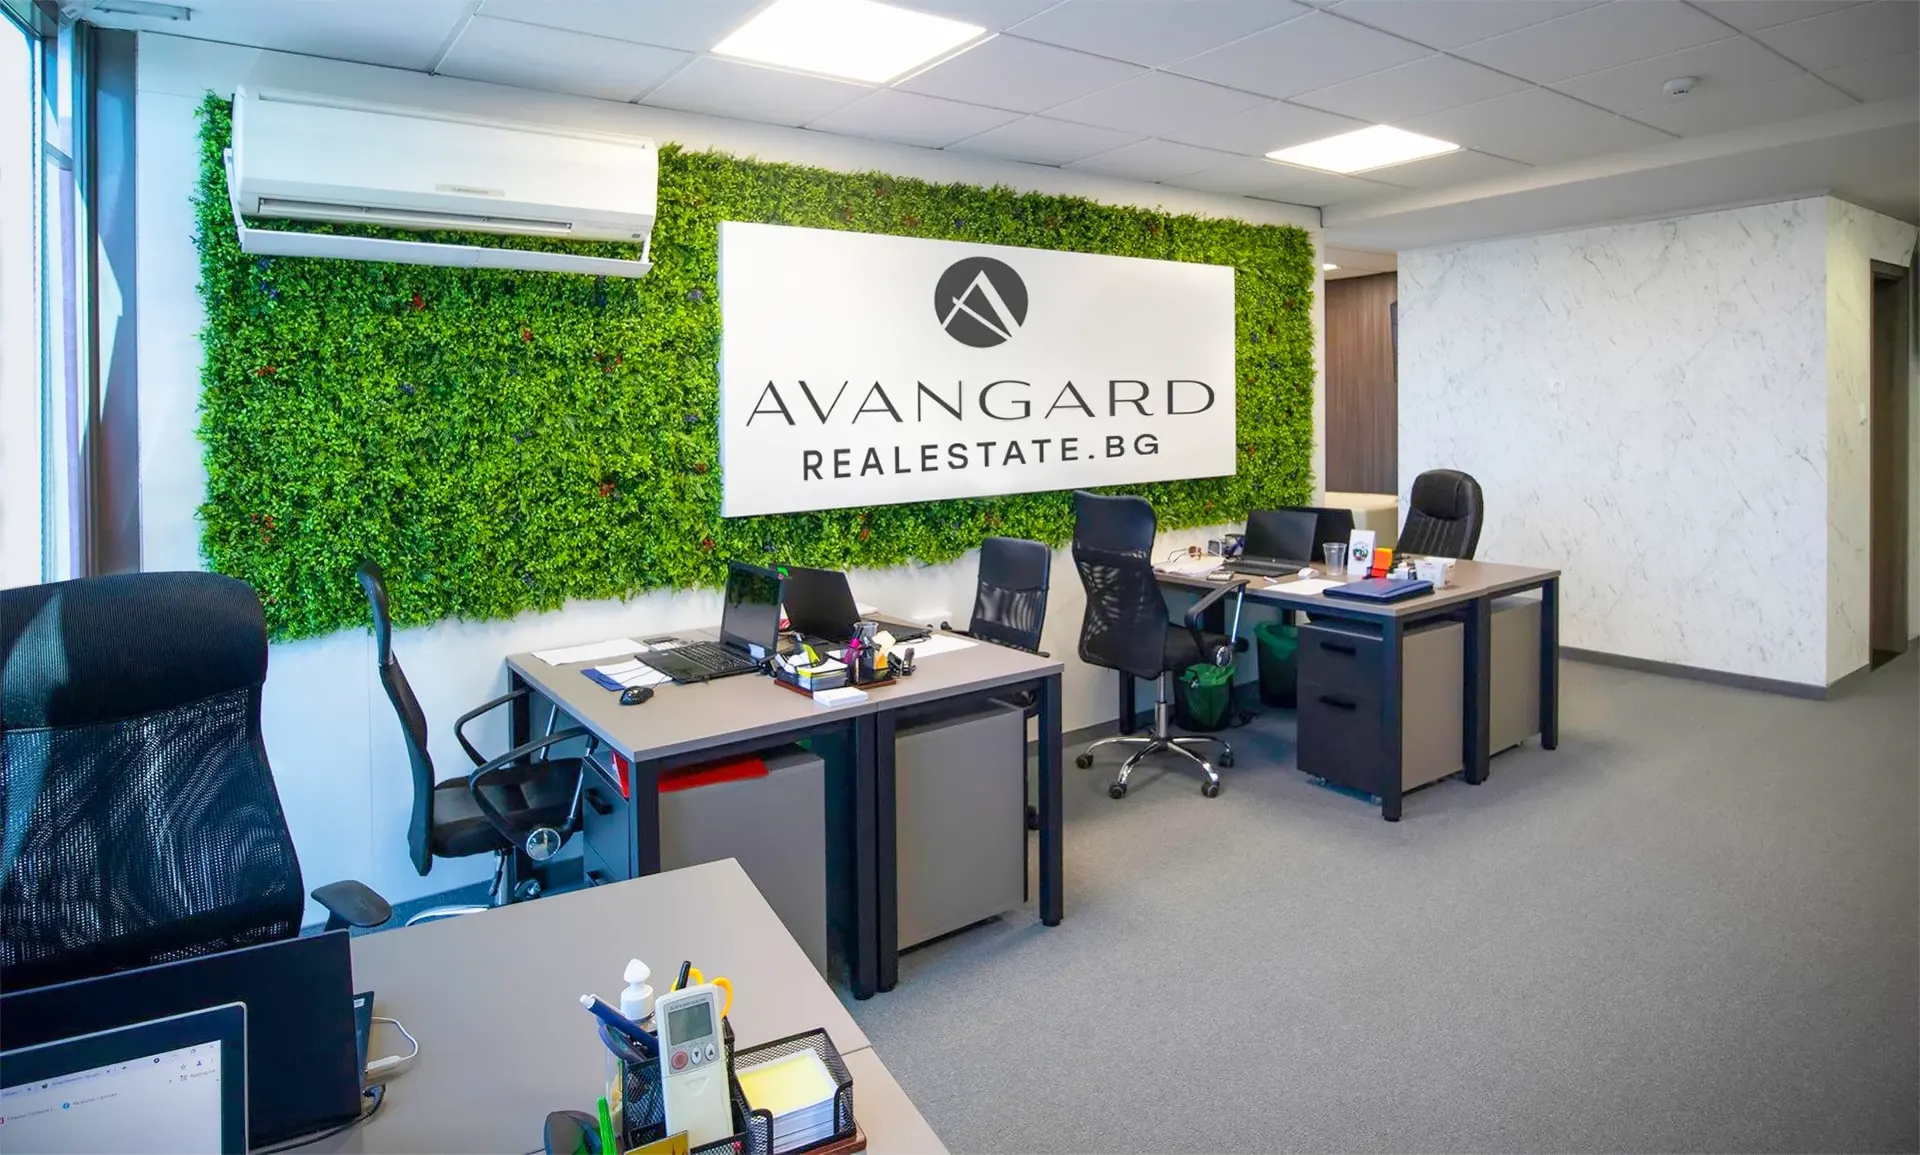 Avangard Real Estate Office 2